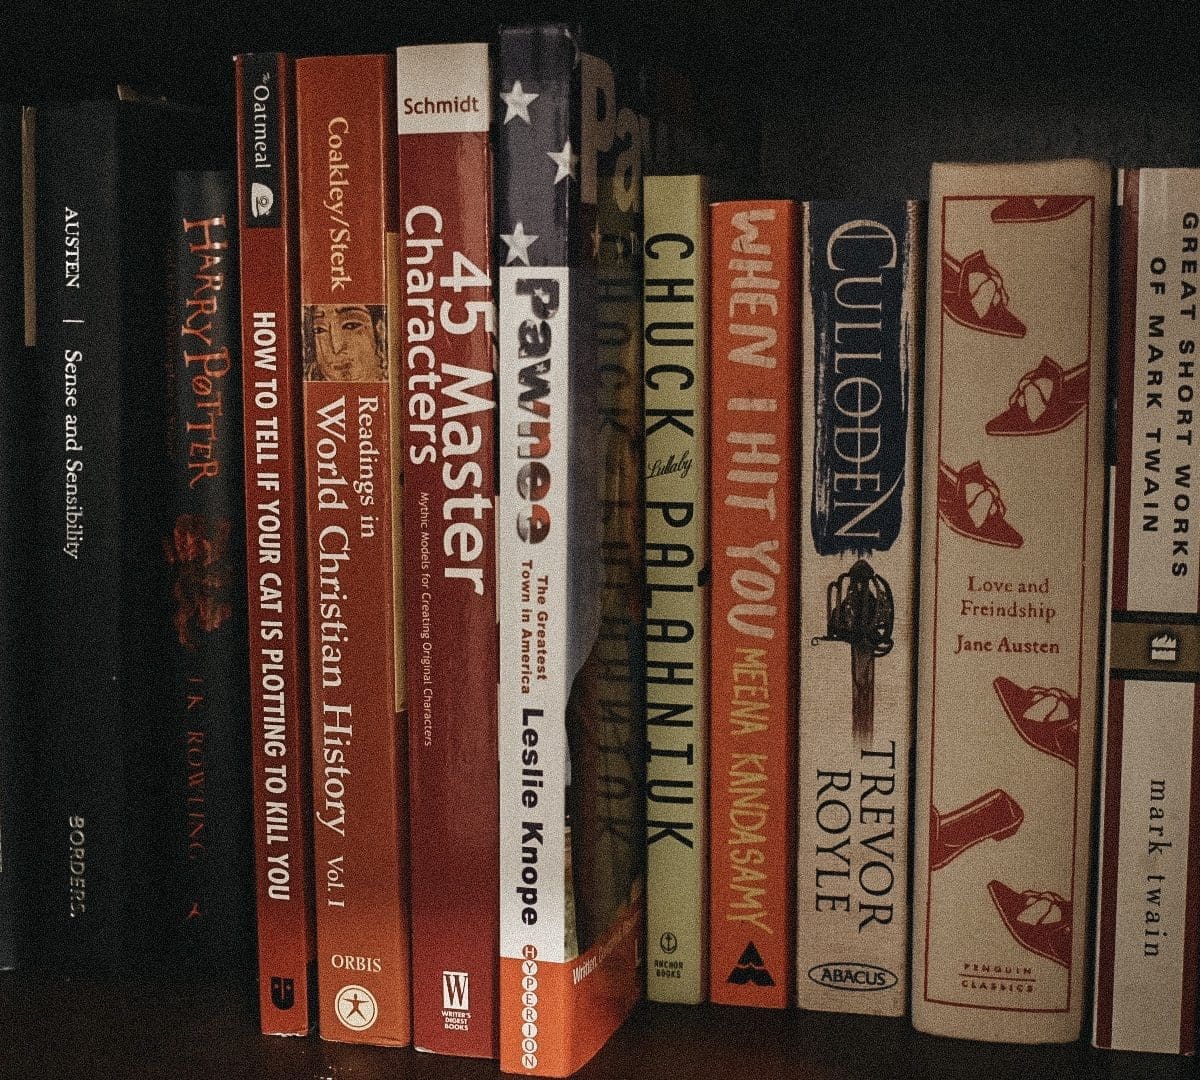 A variety of books on a bookshelf